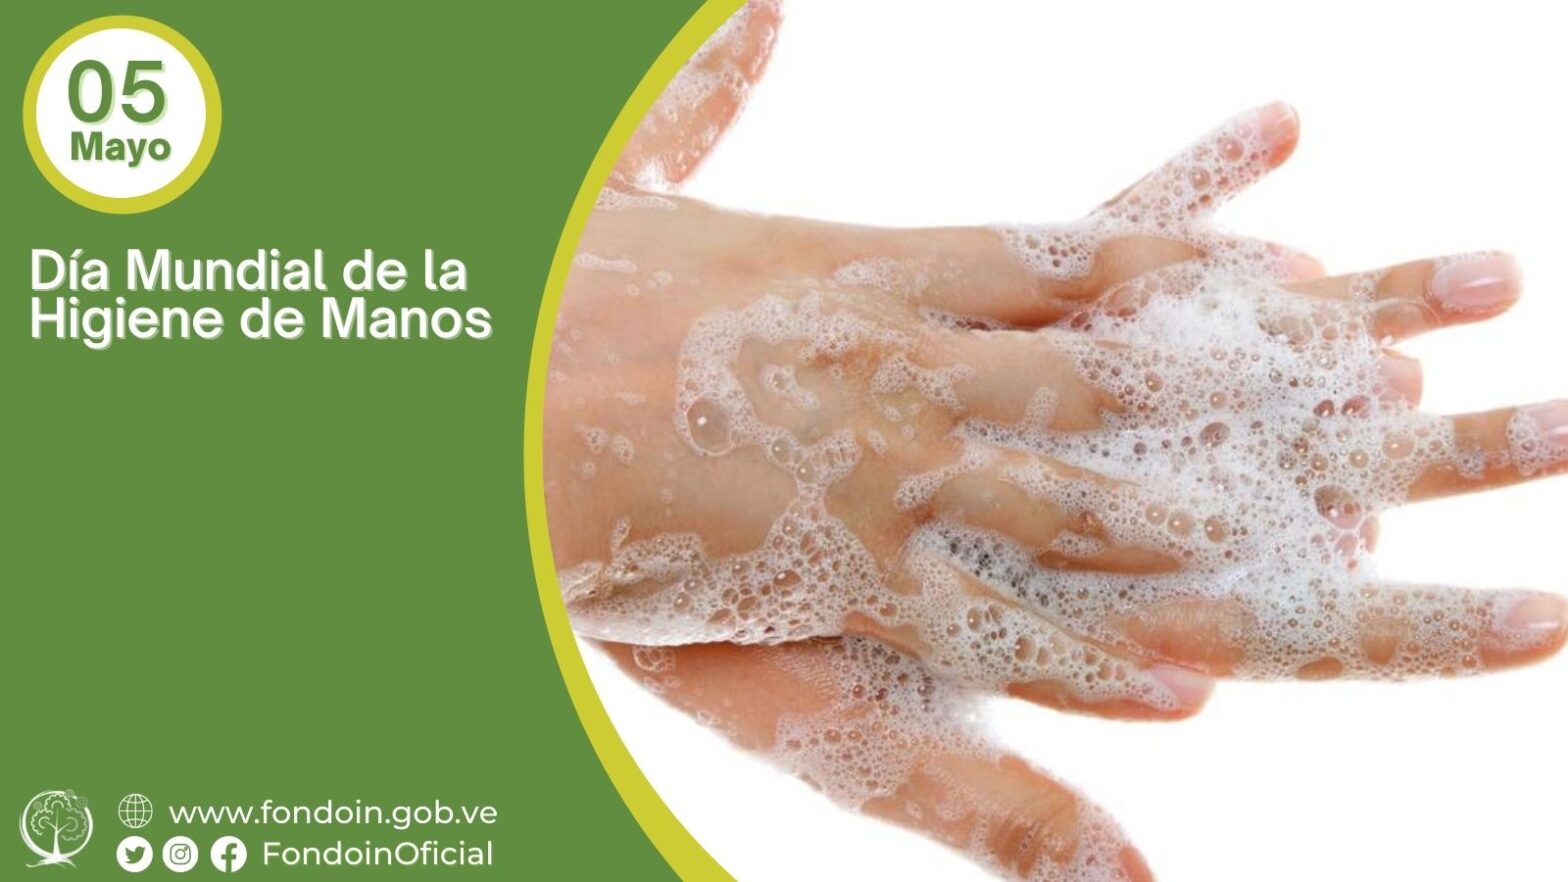 Salve vidas al lavarse las manos